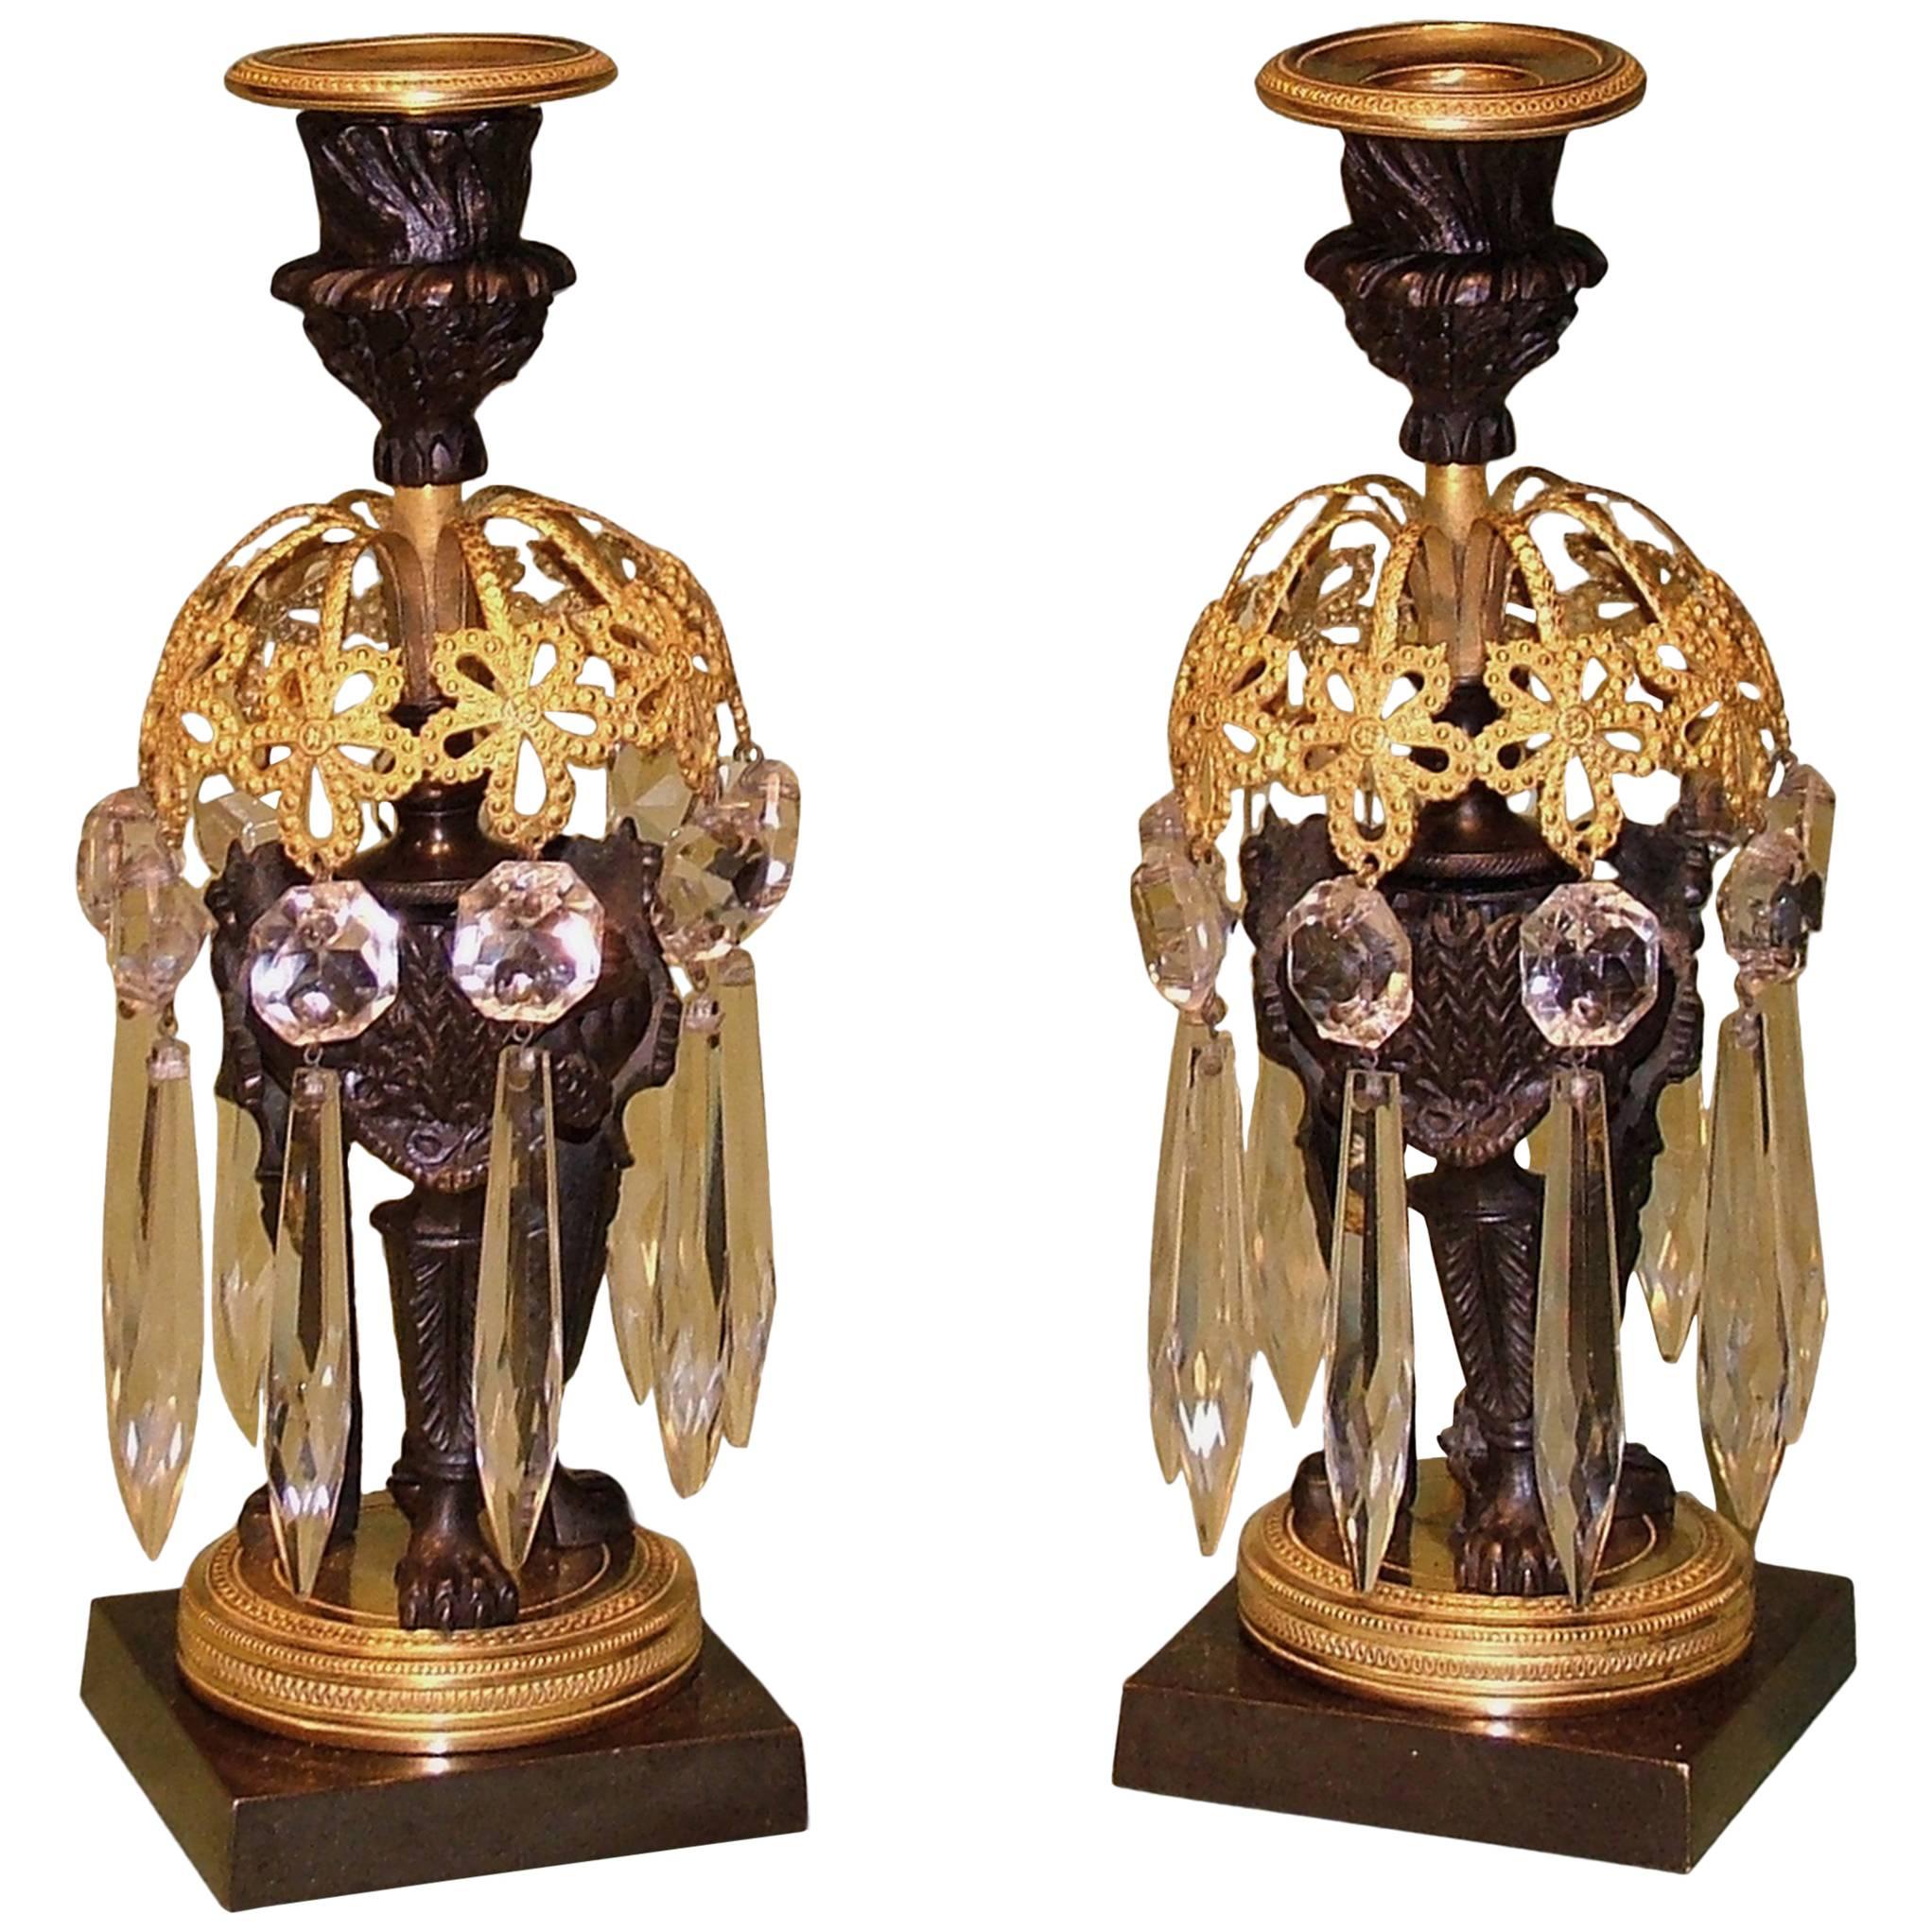 19th Century bronze and ormolu lustre candlesticks